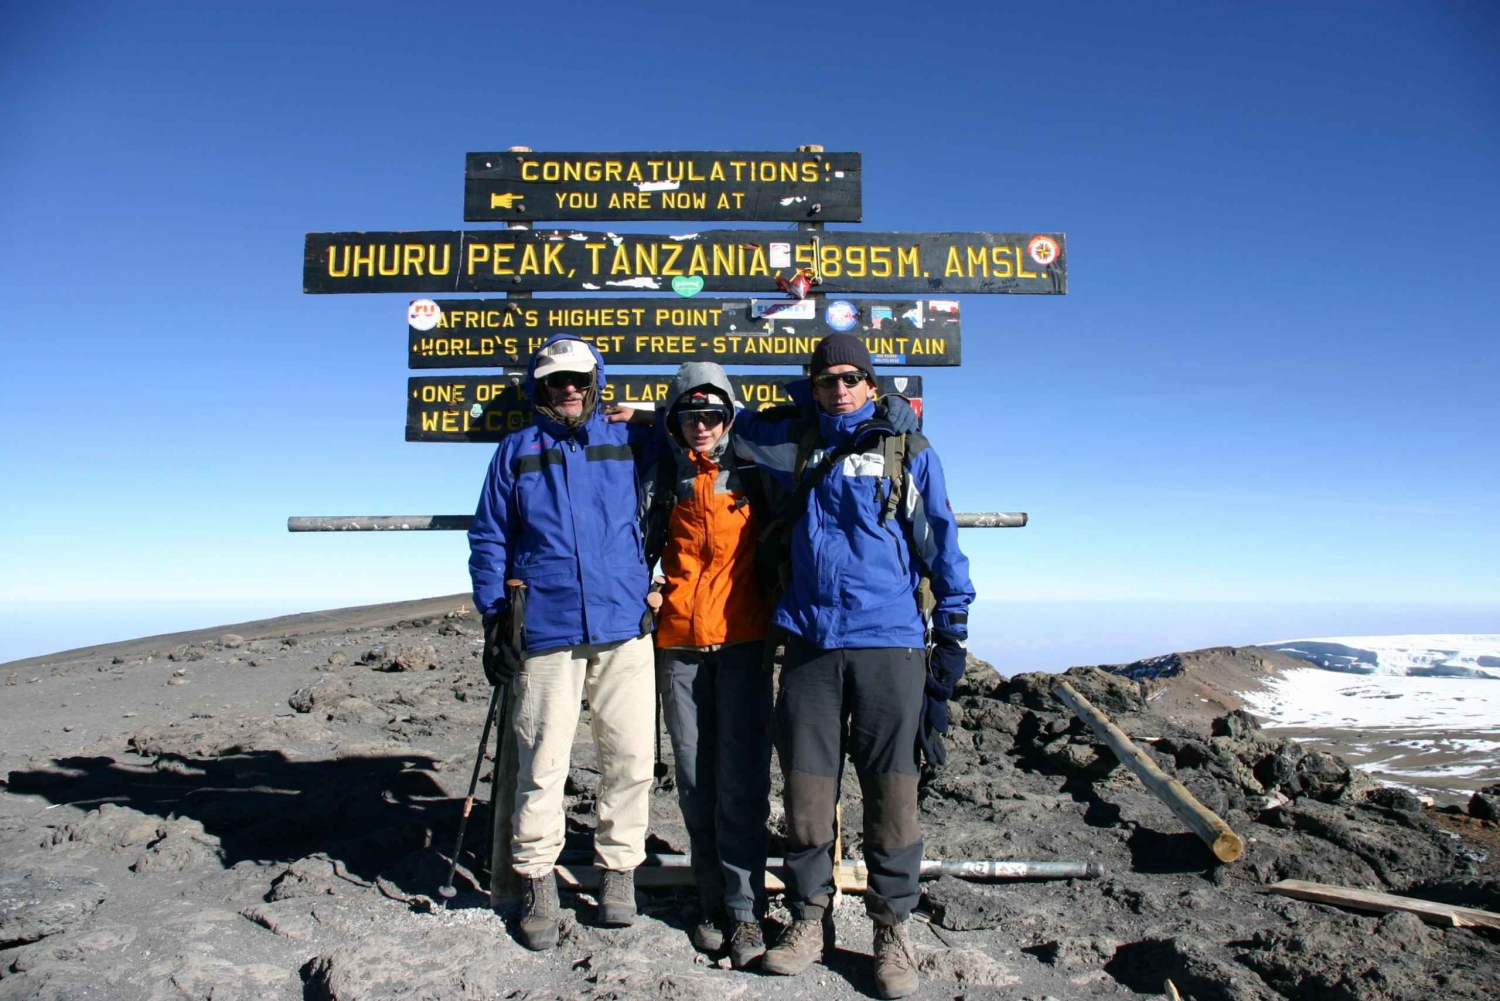 Ascension du Kilimandjaro - Rongai 6 jours 5 nuits